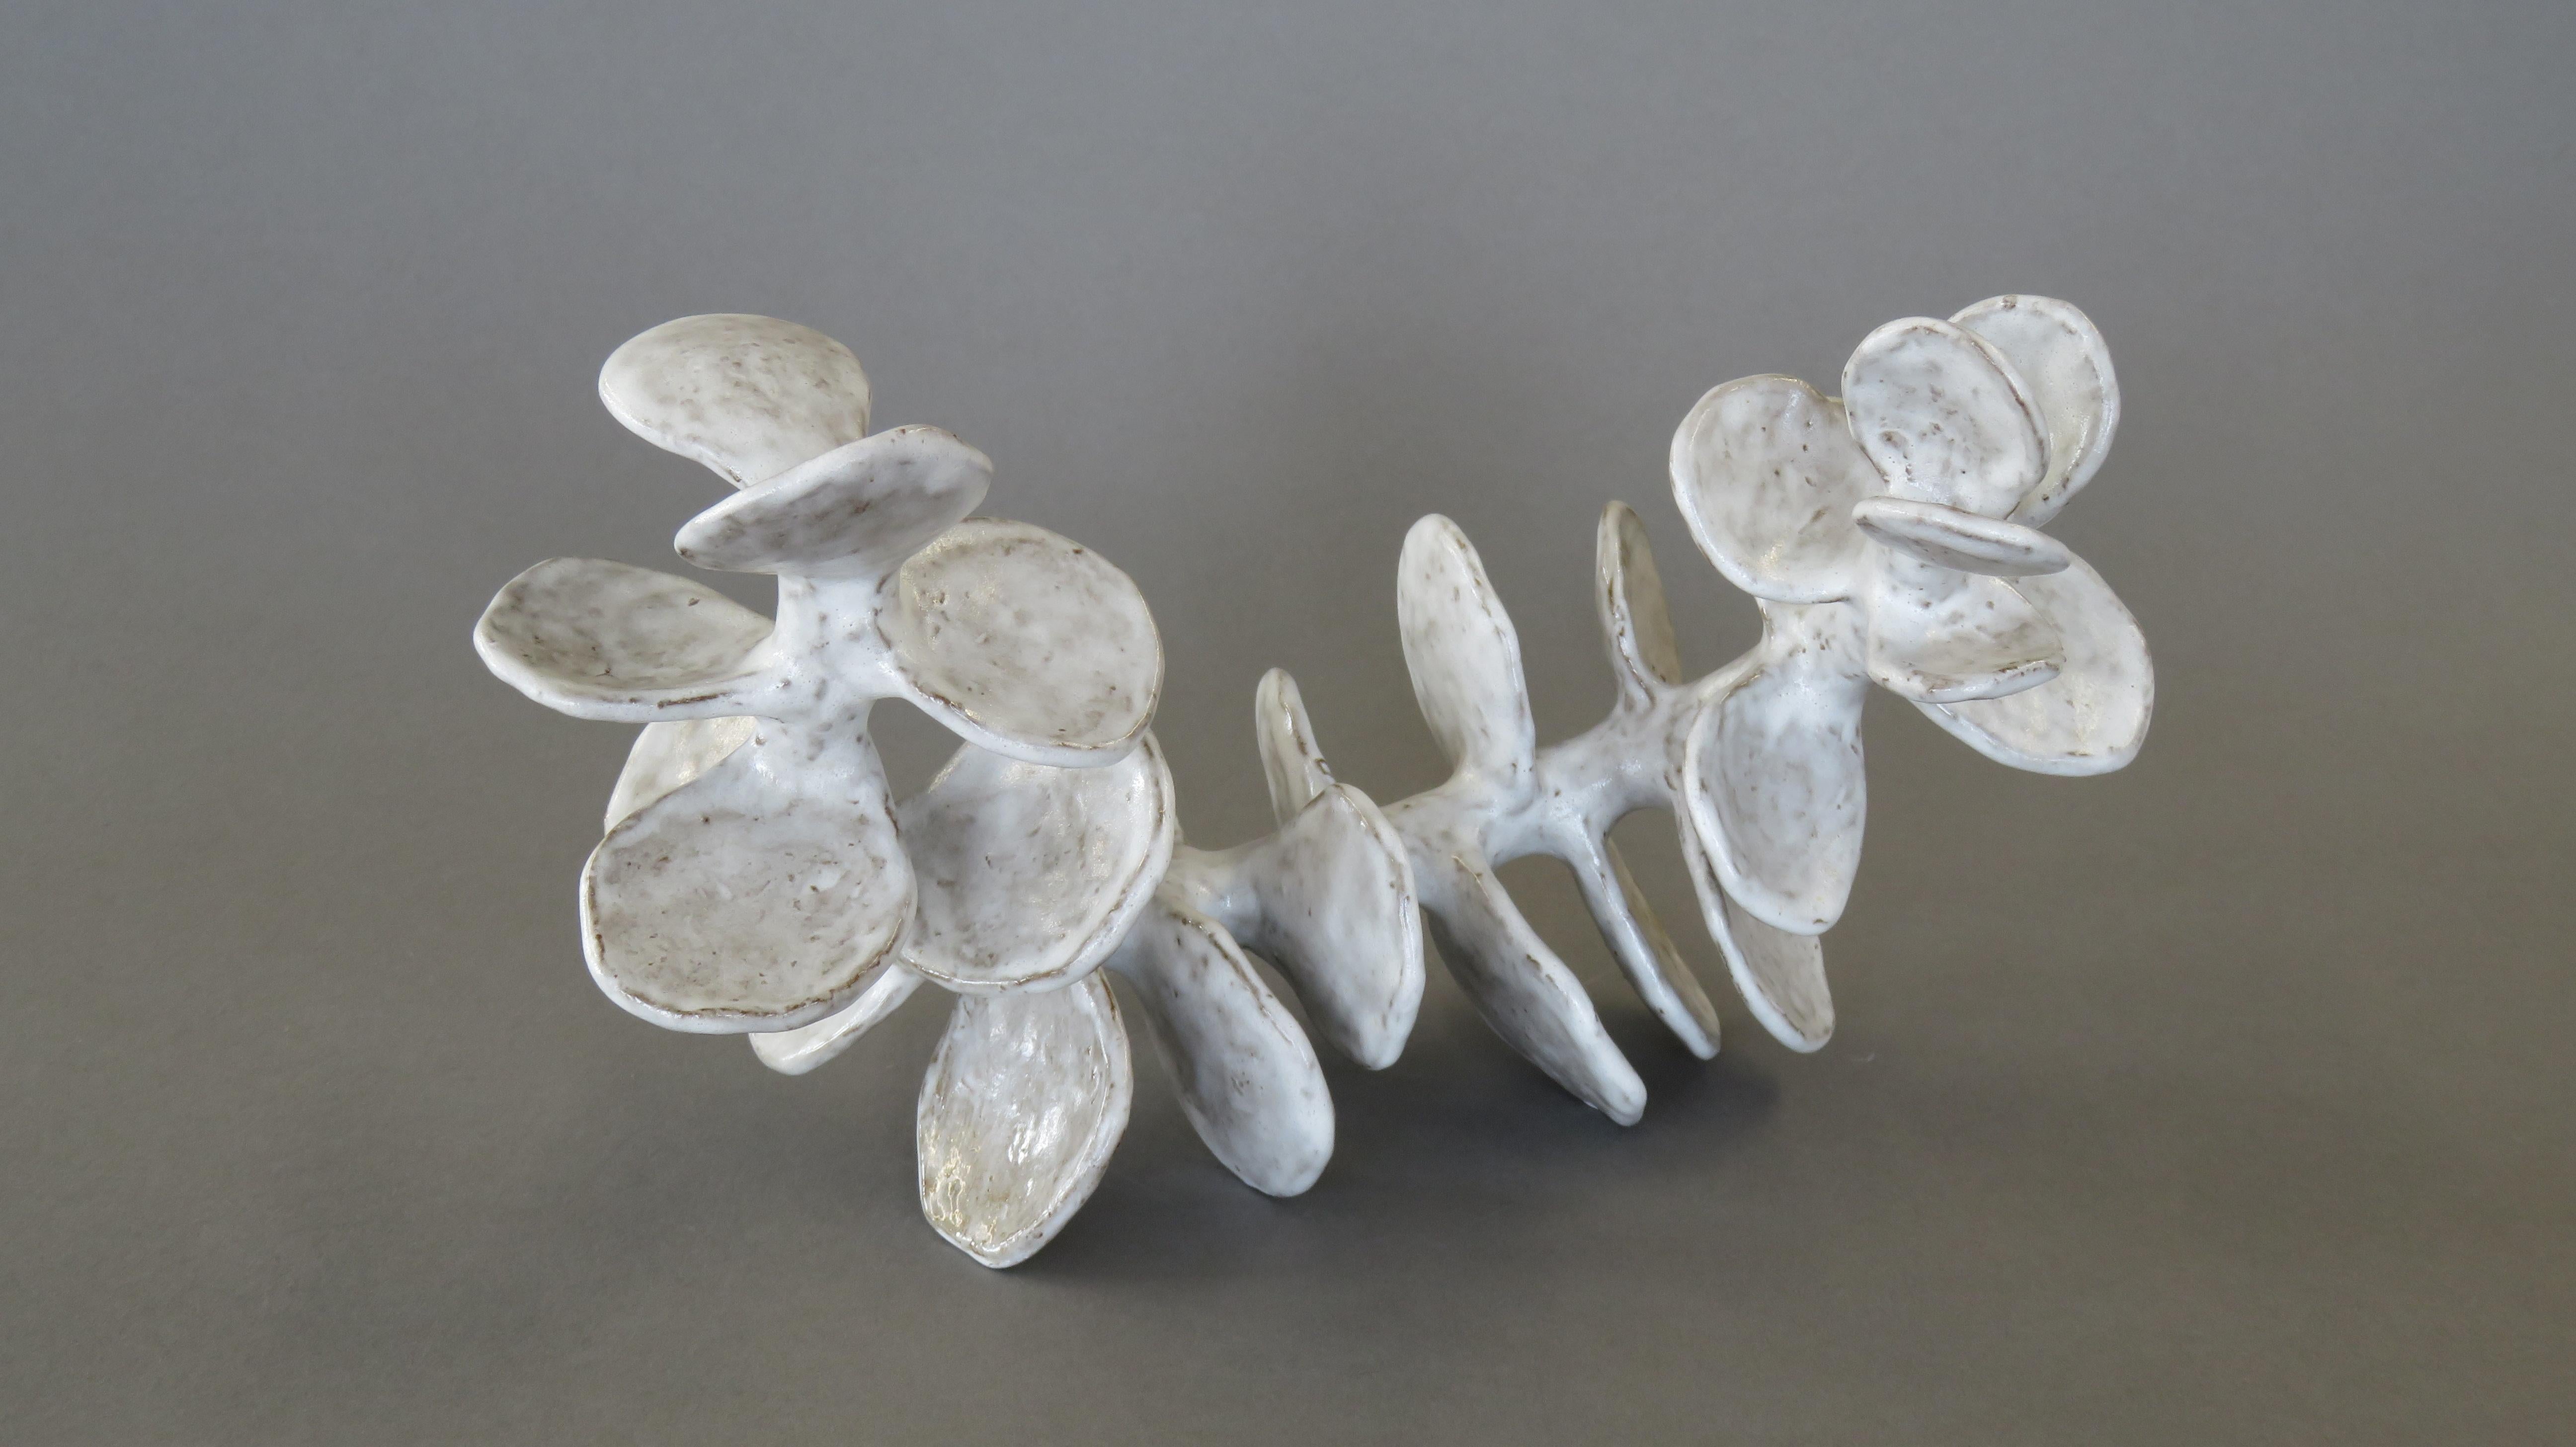 Handgefertigte Keramik-Skulptur:: Liegende Skelett-Wirbelsäule in gesprenkeltem Weiß 5